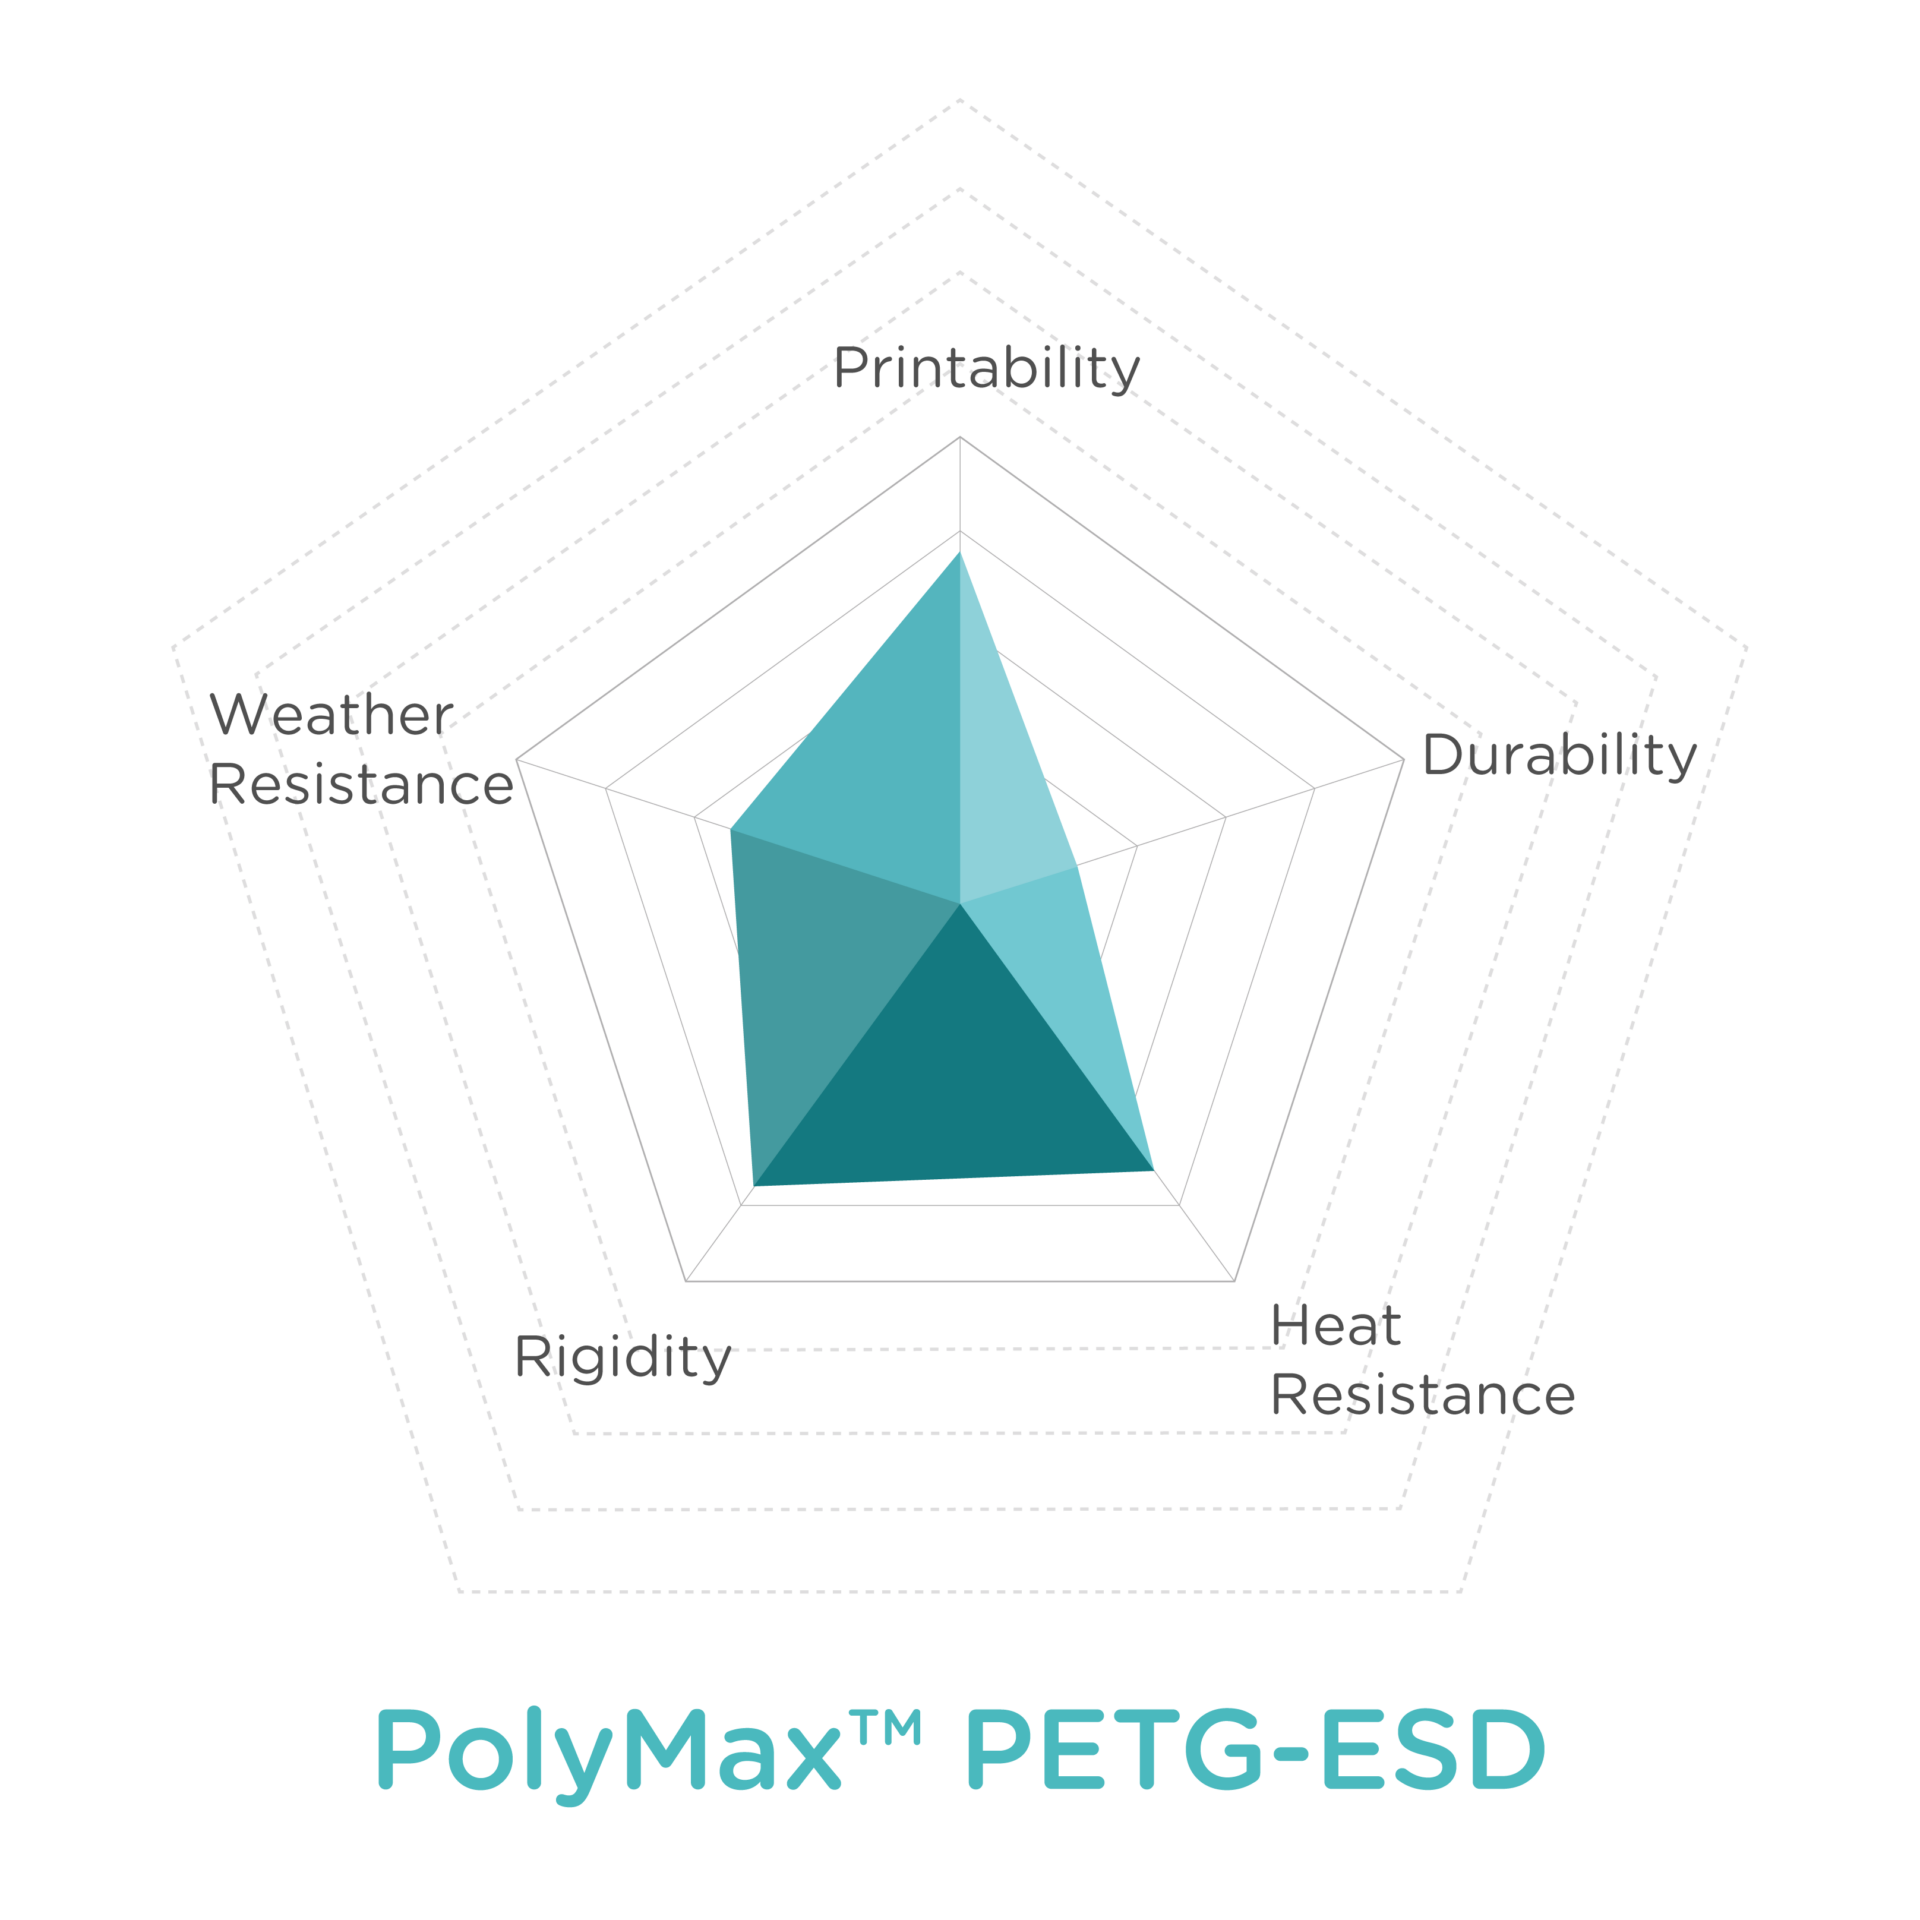 PolyMax™ PETG